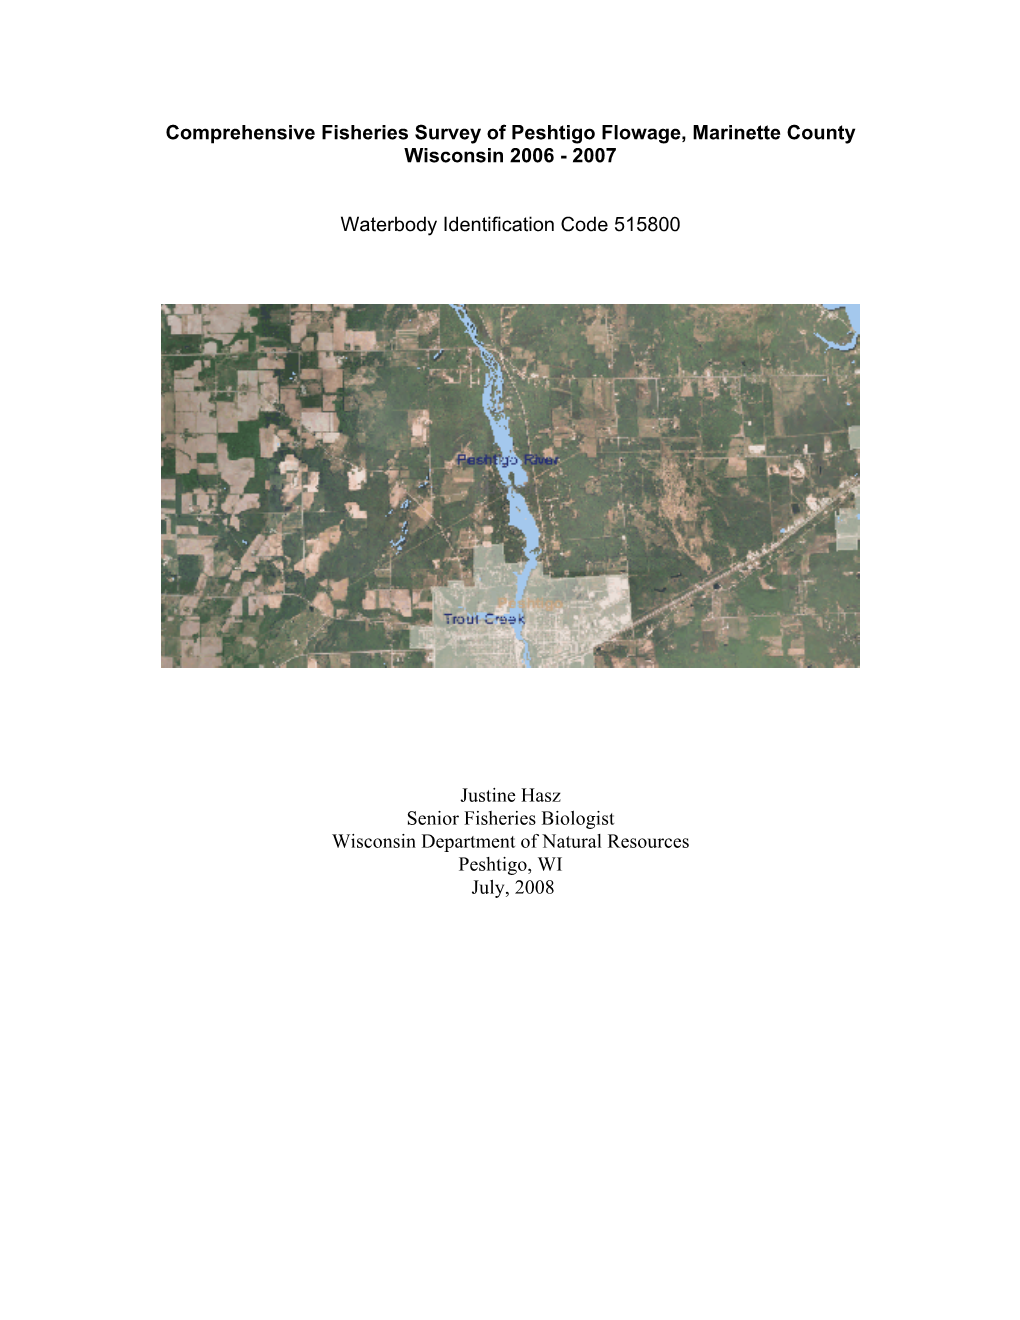 Comprehensive Fisheries Survey of Peshtigo Flowage, Marinette County Wisconsin 2006 - 2007